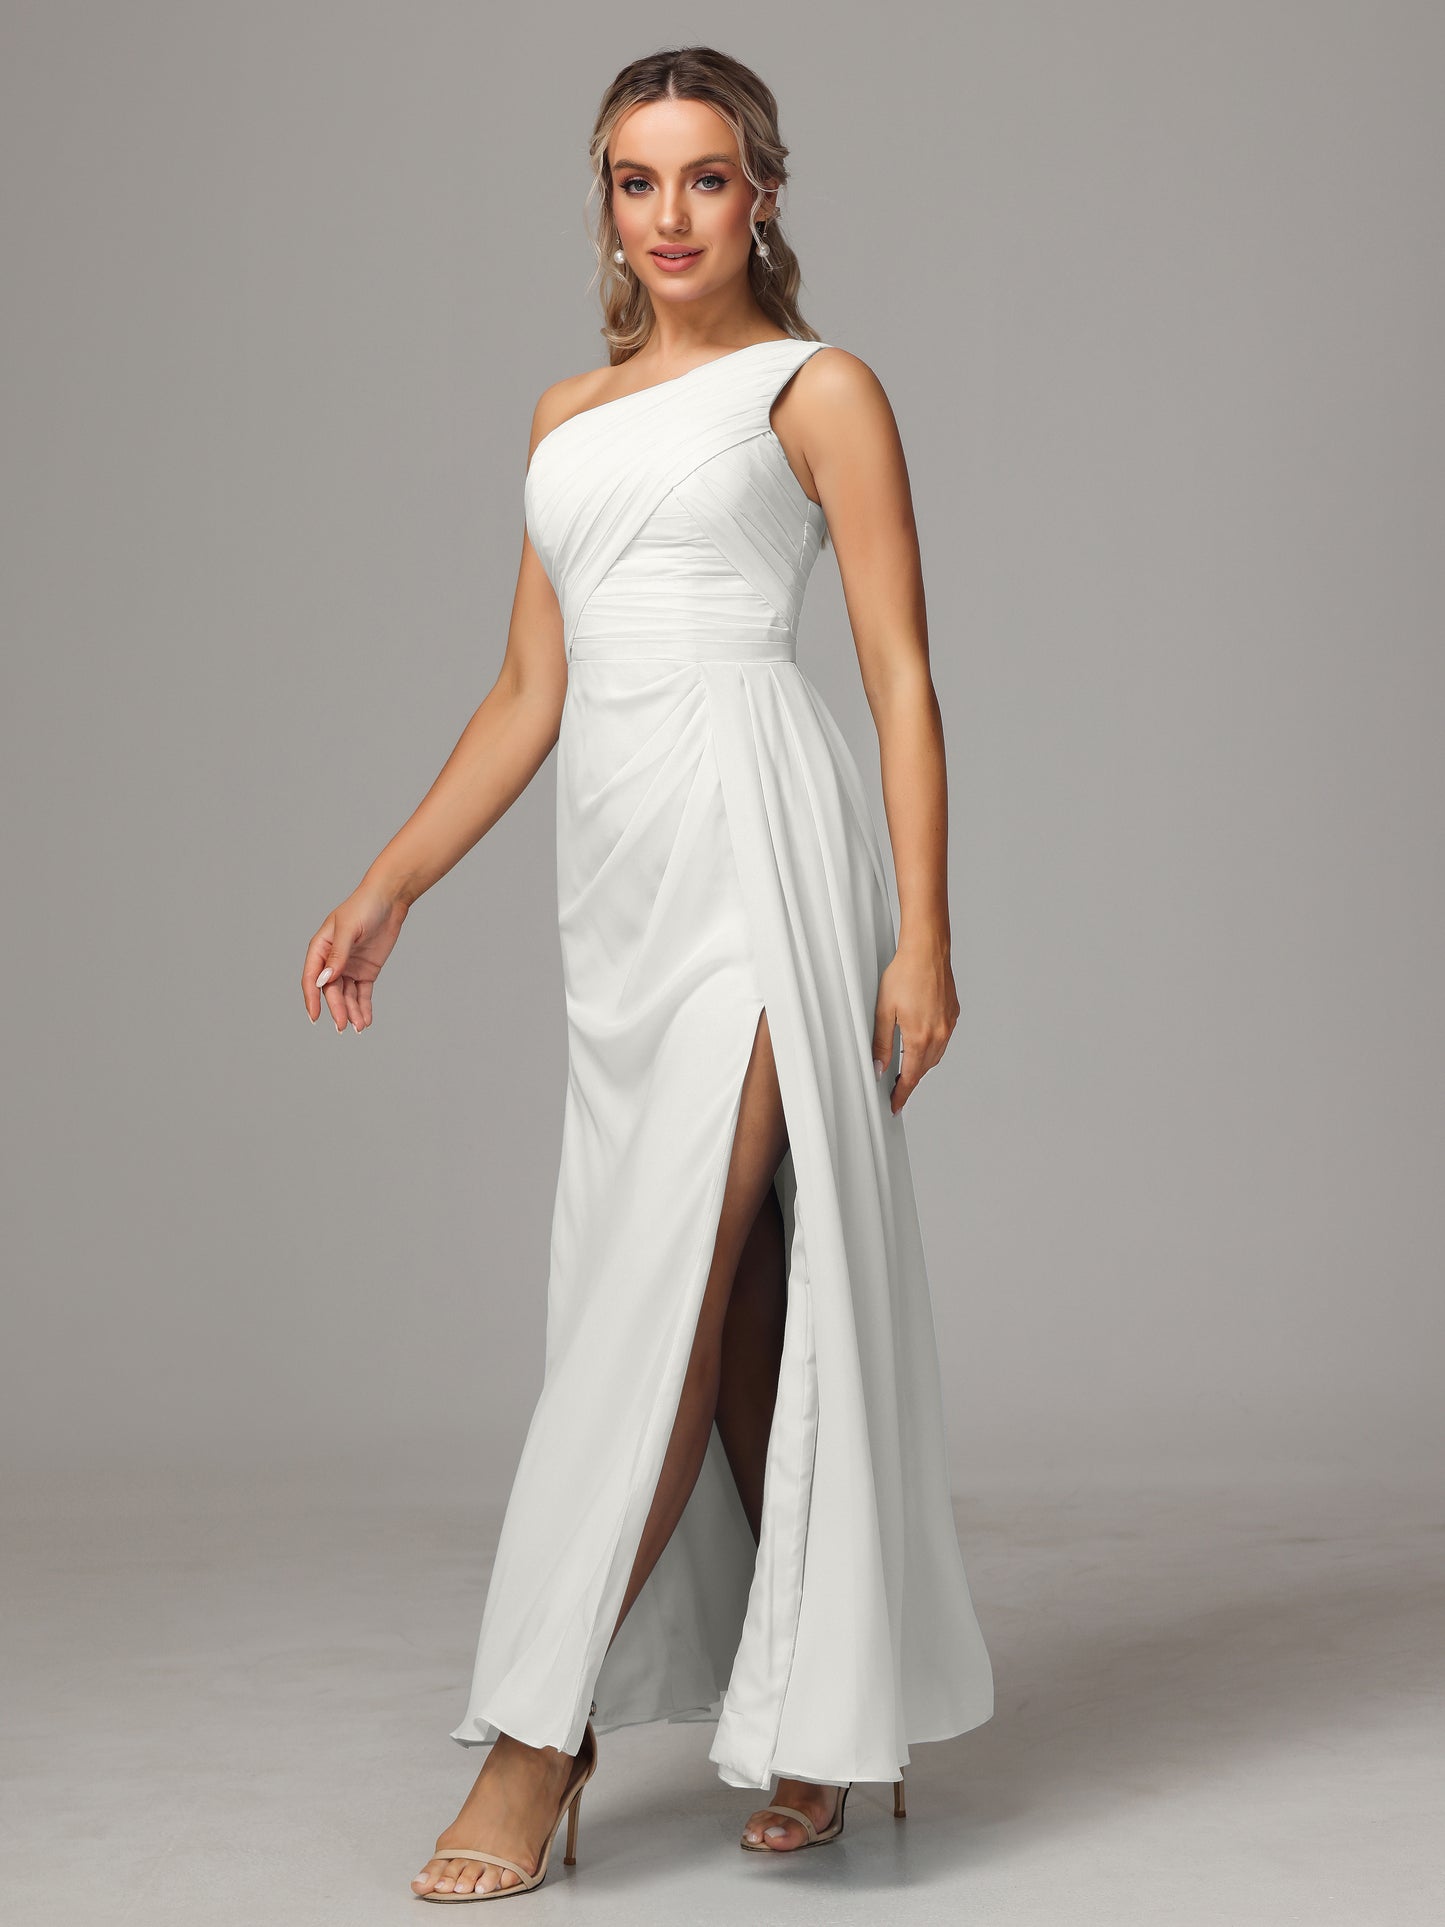 One Shoulder Floor Length Chiffon Bridesmaid Dress